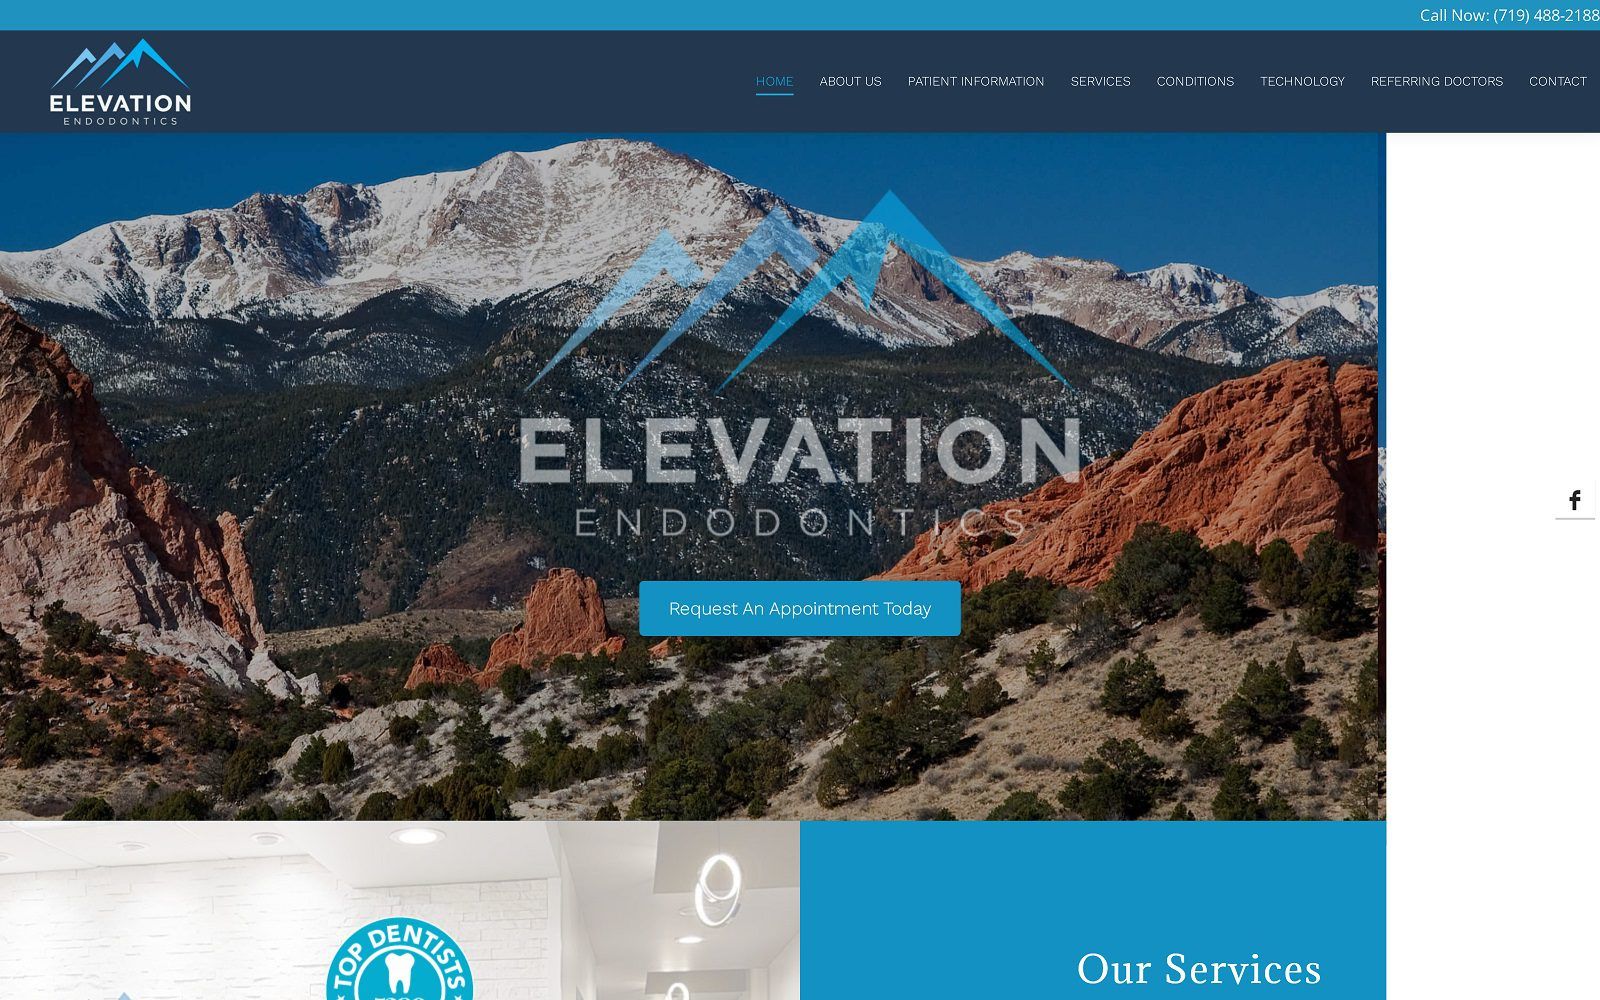 The screenshot of elevation endodontics website